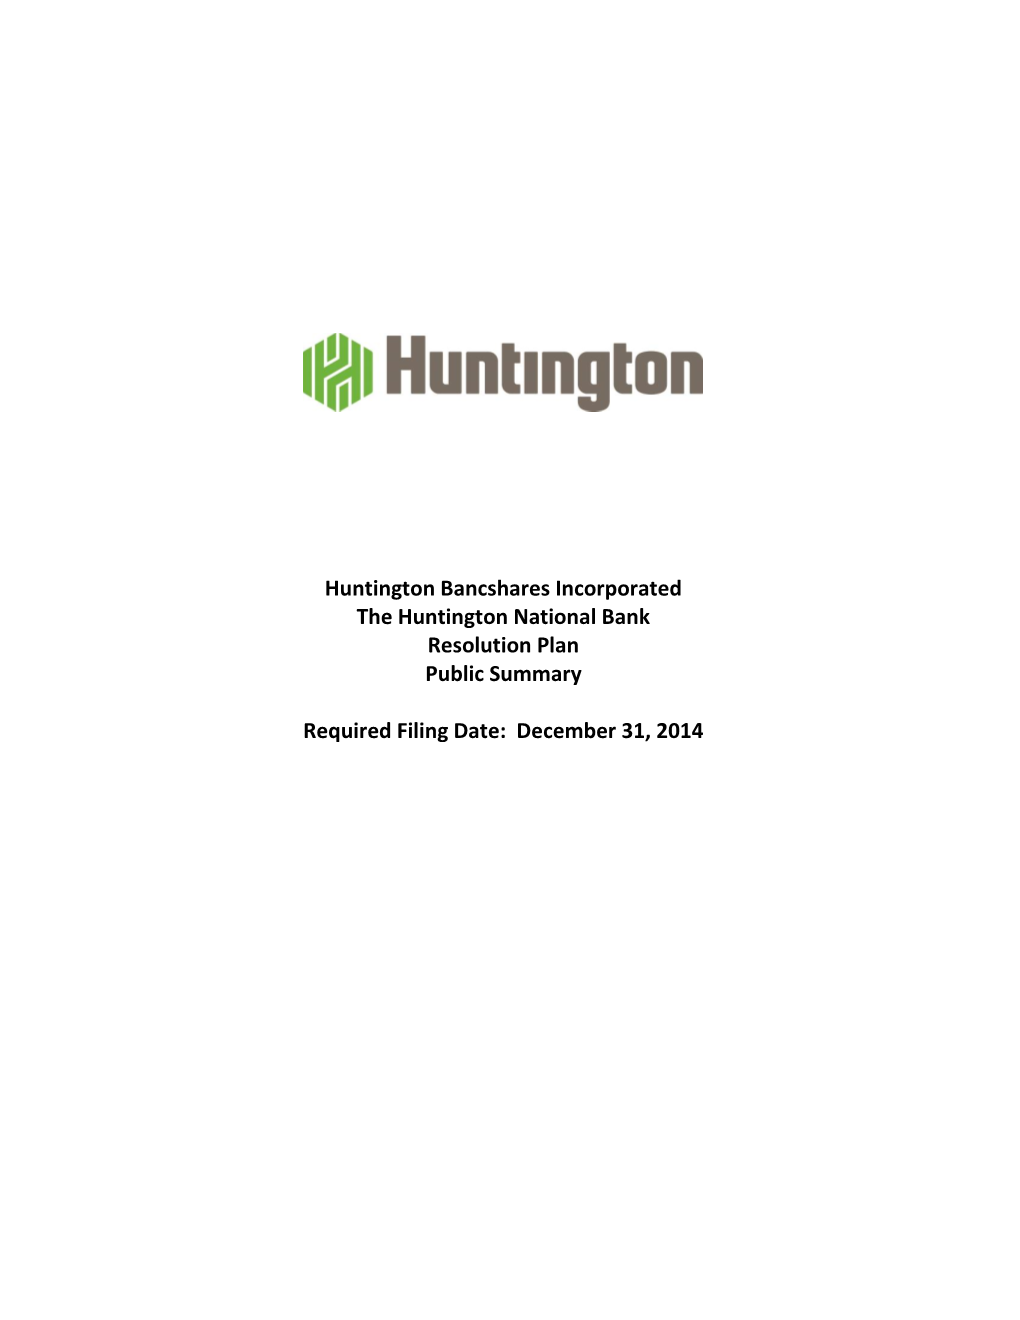 Huntington Bancshares Incorporated the Huntington National Bank Resolution Plan Public Summary